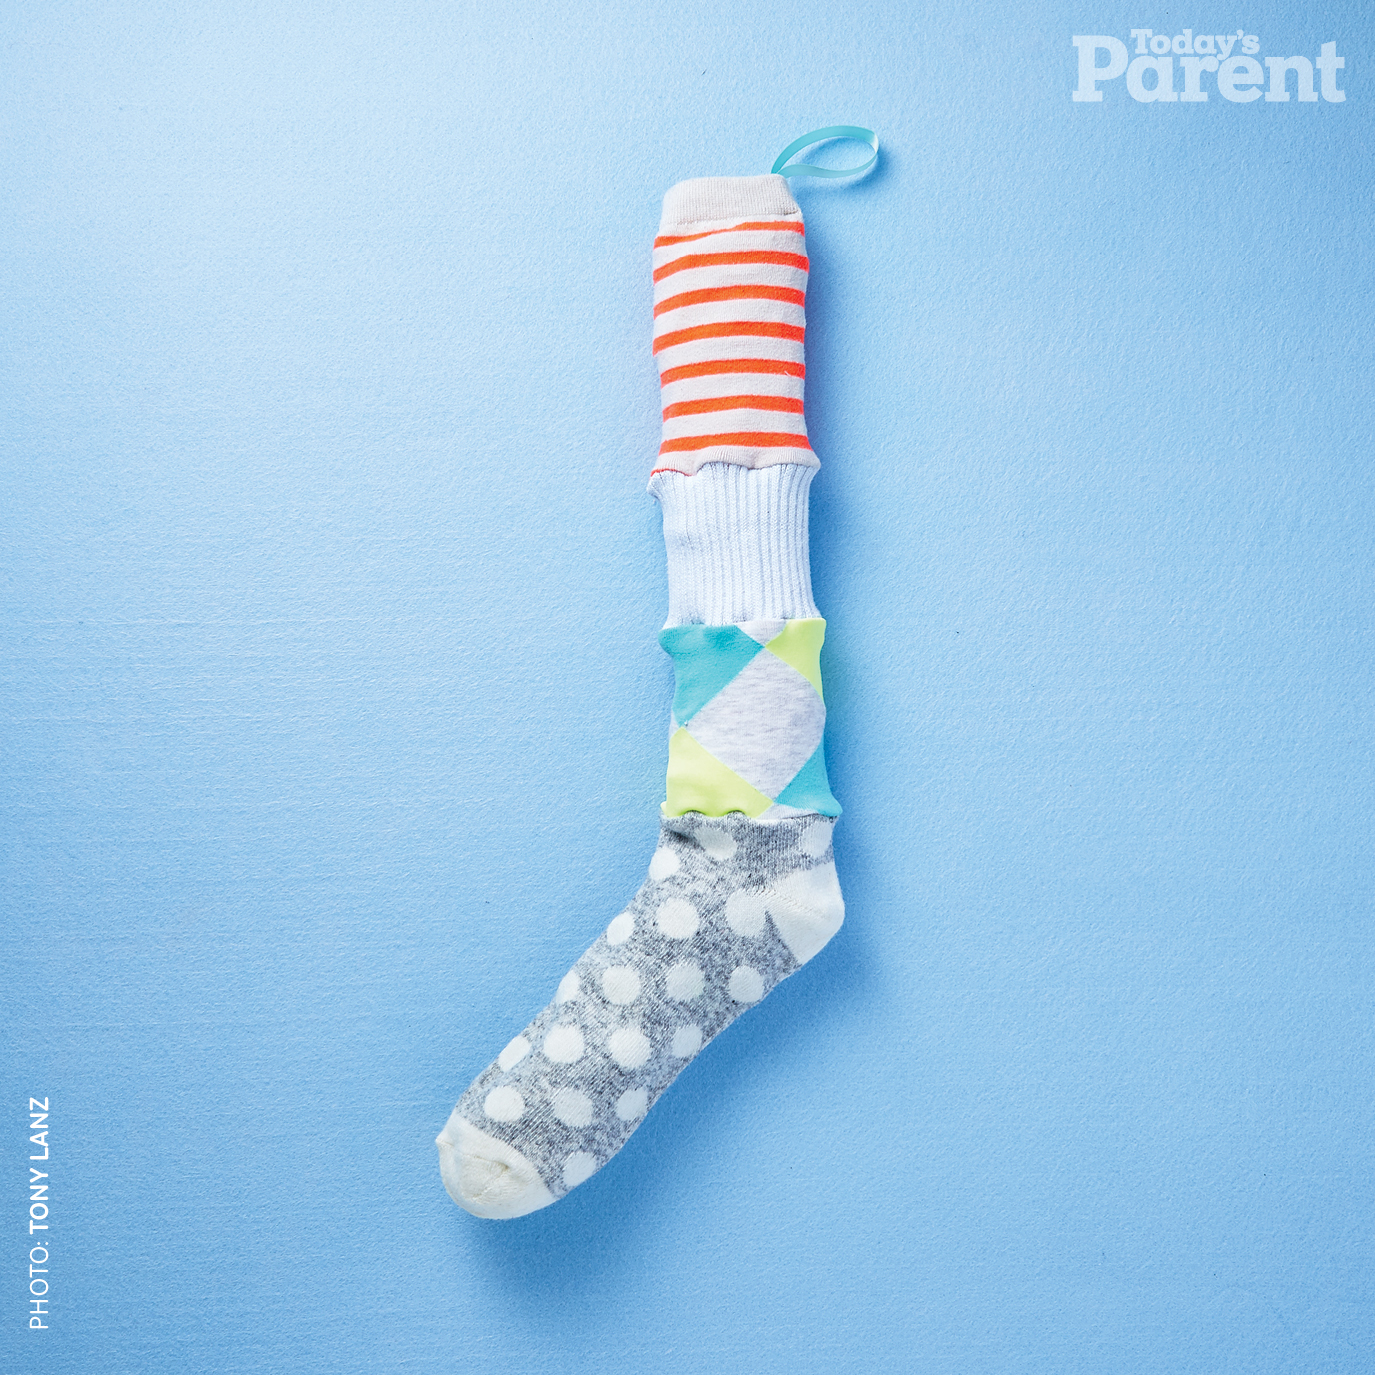 DIY-orphaned-sock-stocking-article